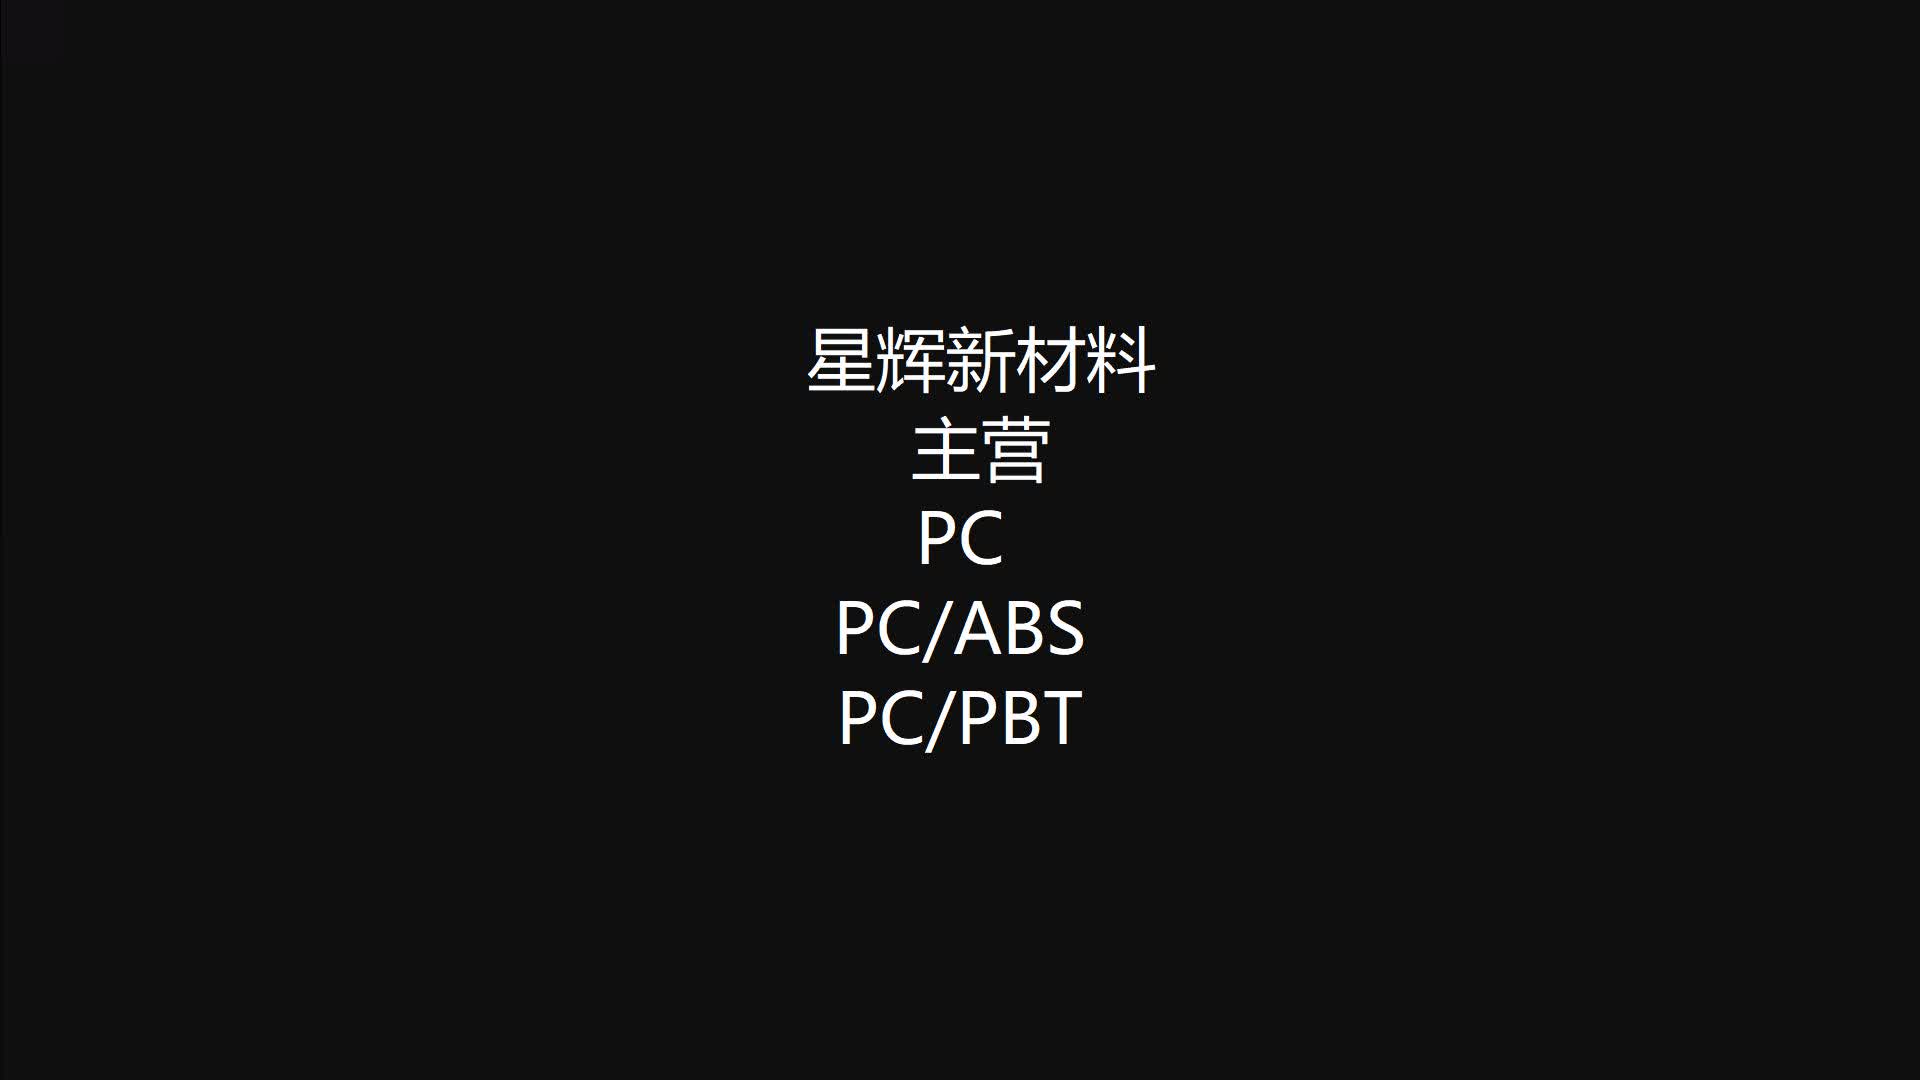 星辉PC,PC/ABS,PC/PBT